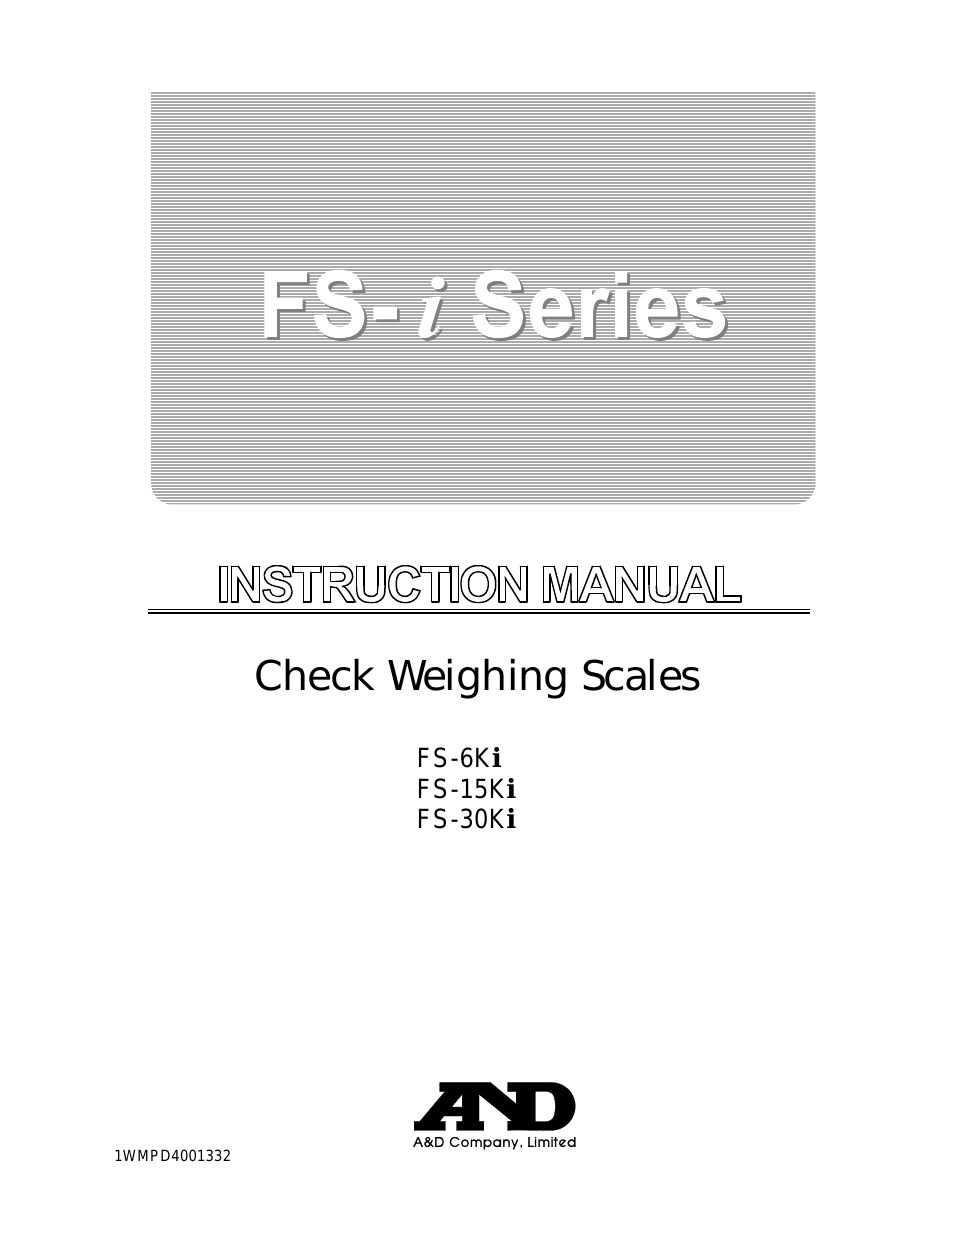 Check Weighing Scales FS-30Ki